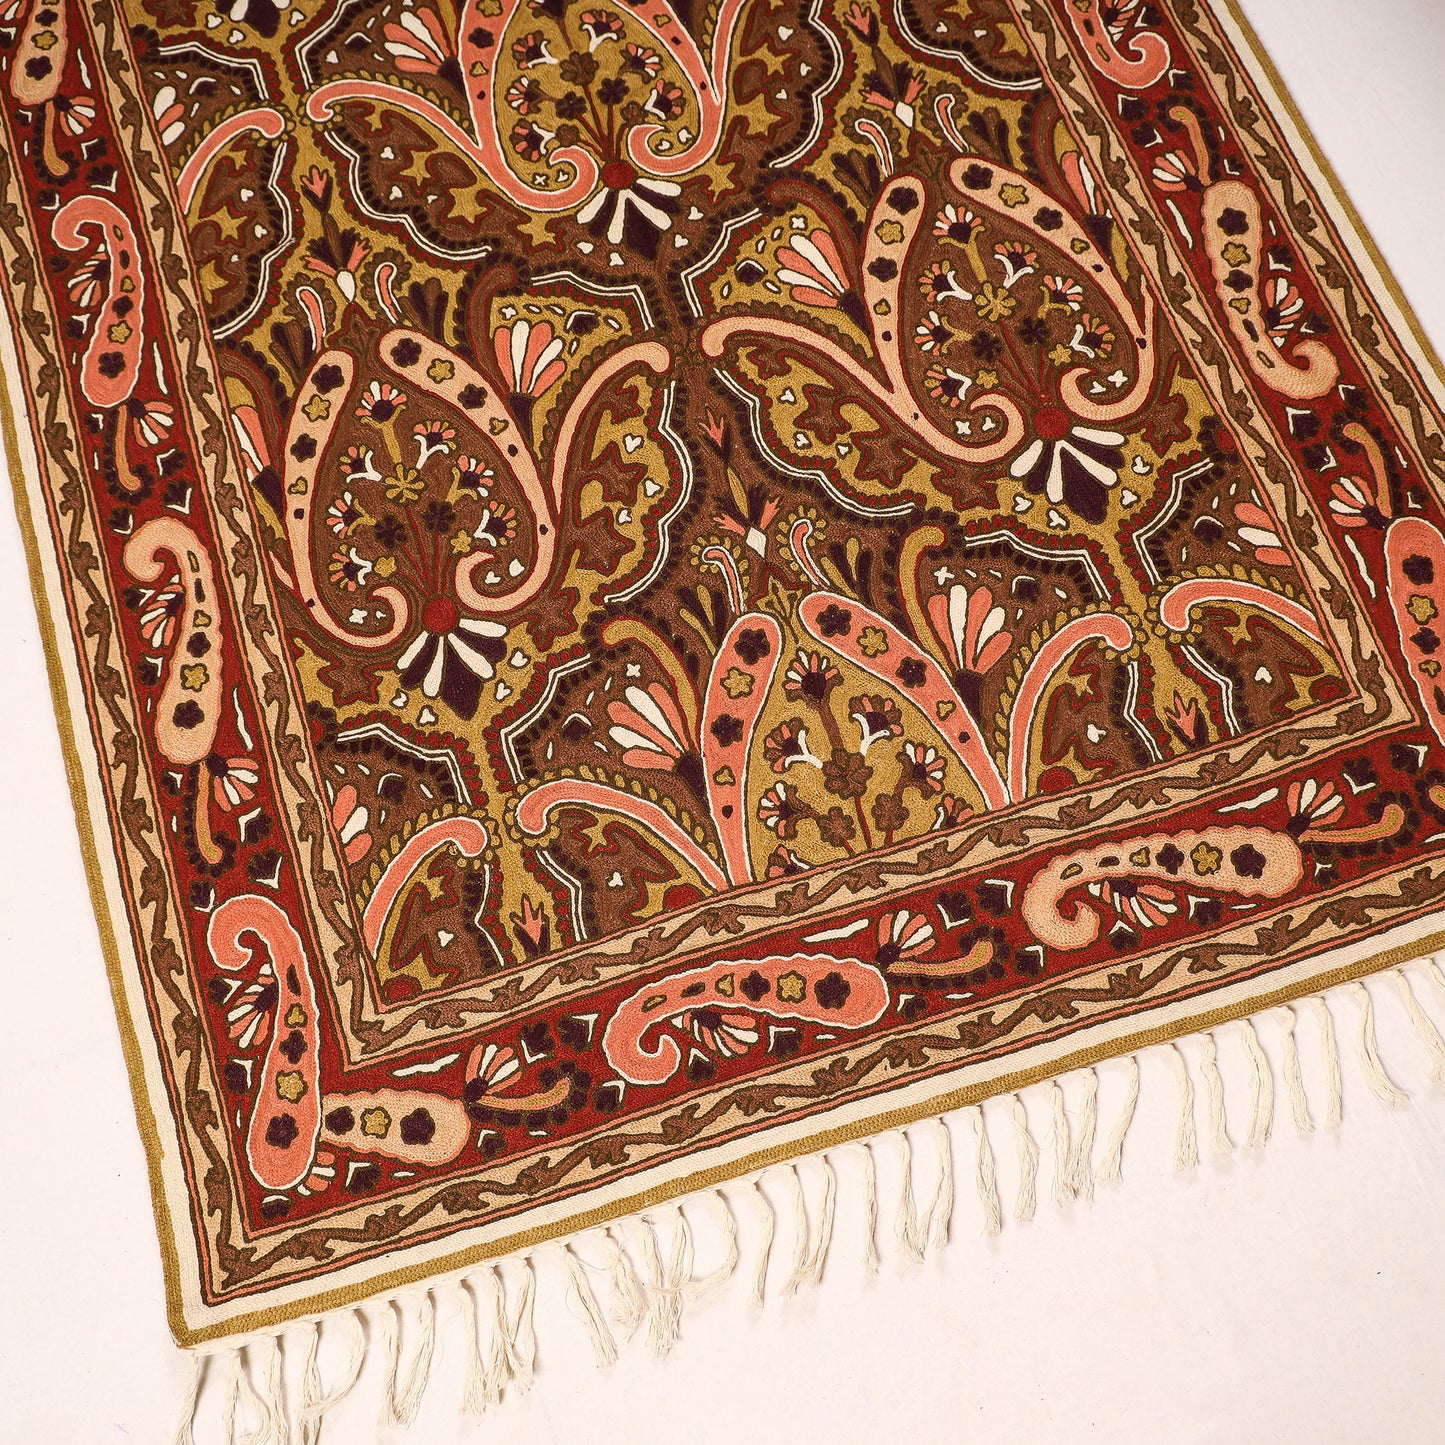 Original Chain Stitch Crewel Wool Thread Hand Embroidery Rug / Carpet (72 x 46 in)